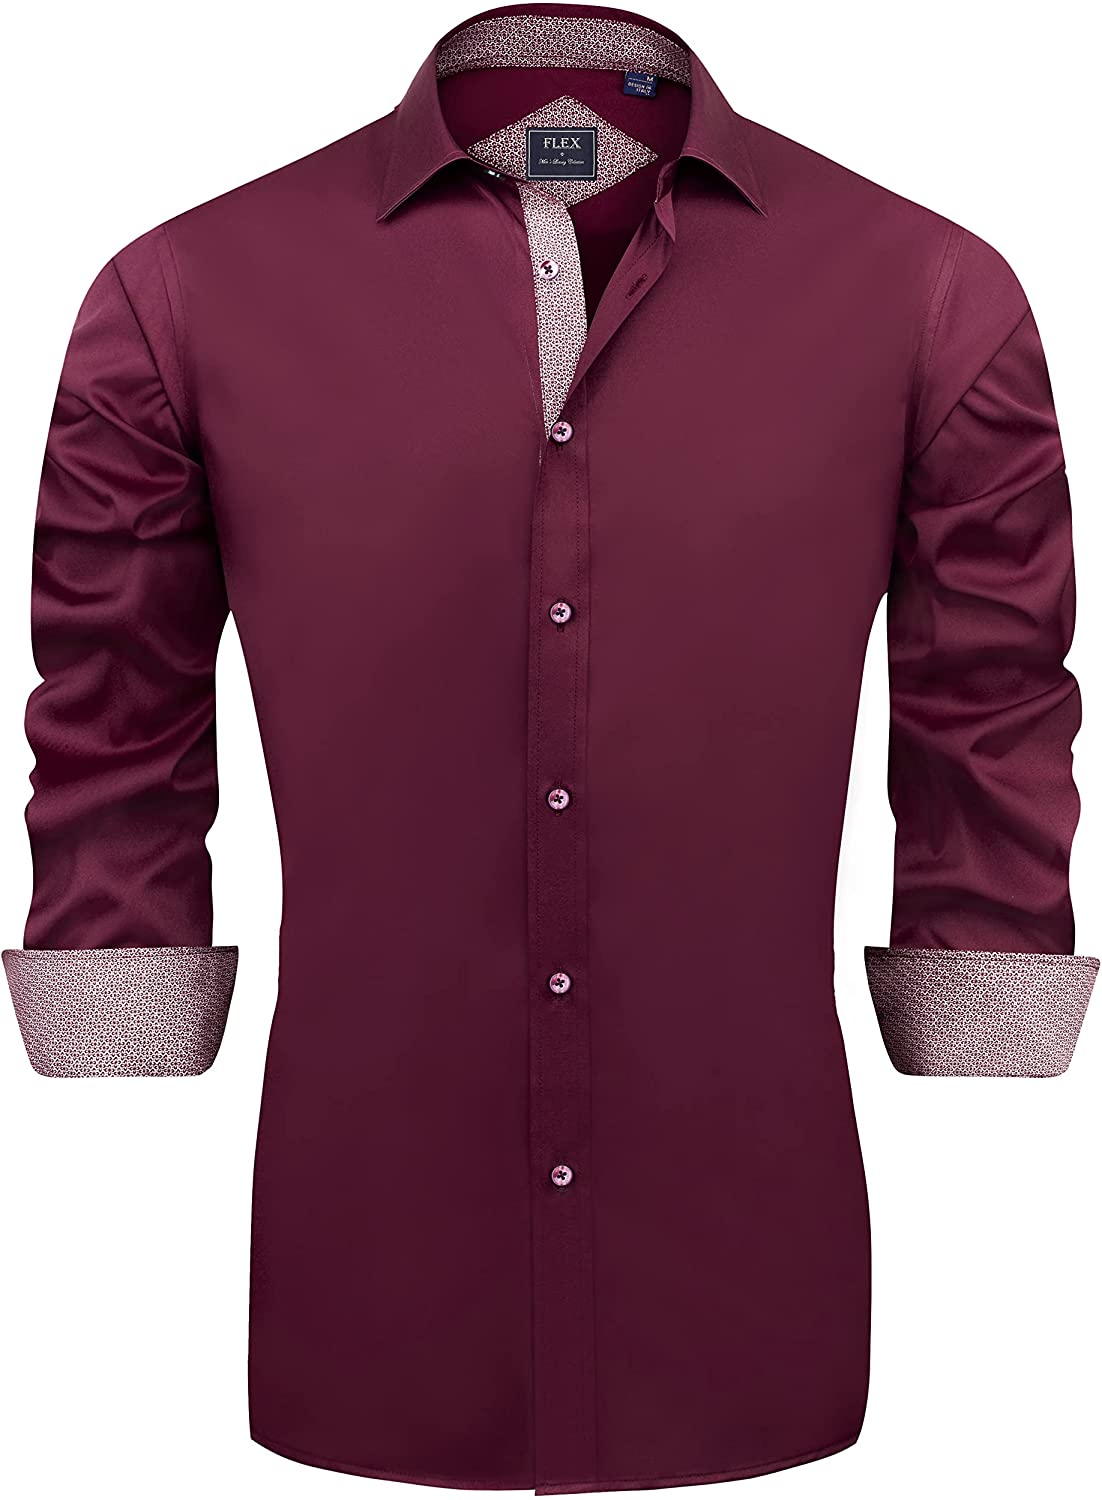 J.VER Mens Plaid Flannel Button Down Shirts Long Sleeve Casual